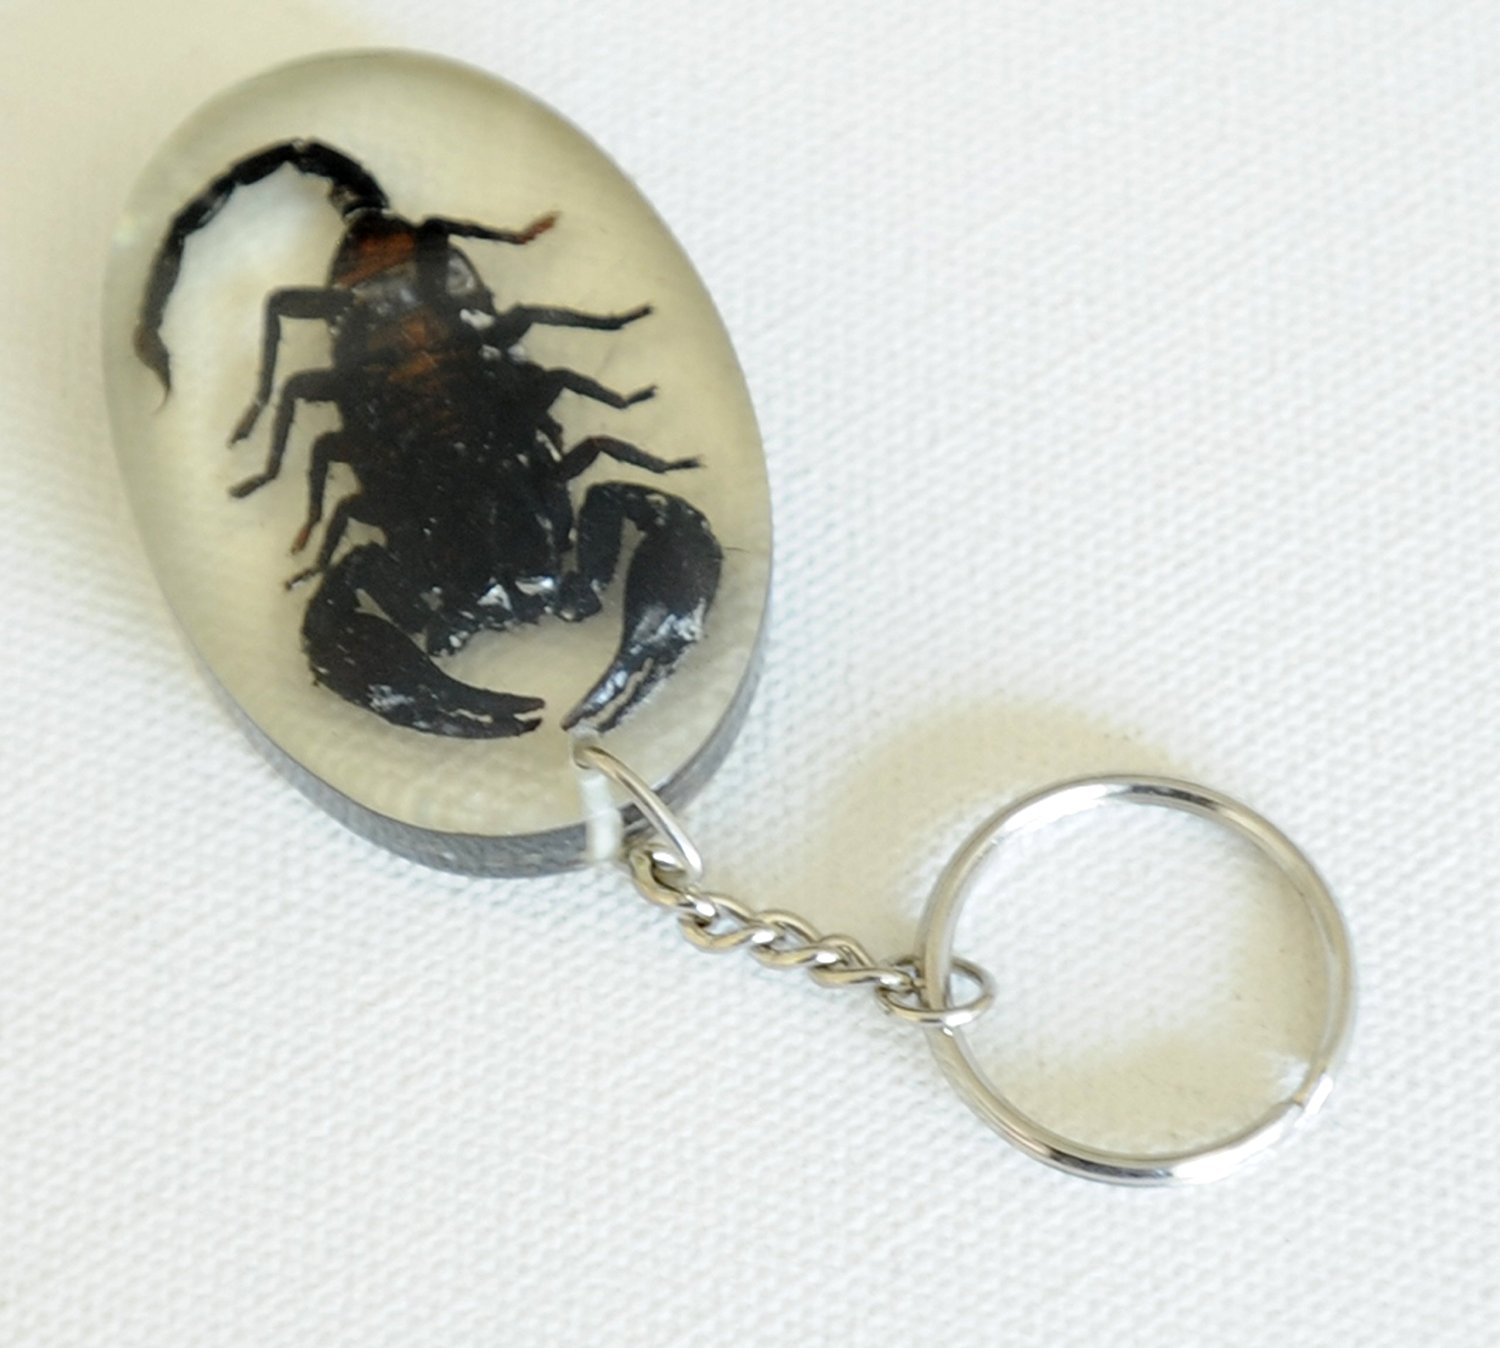 Scorpion keyring photo